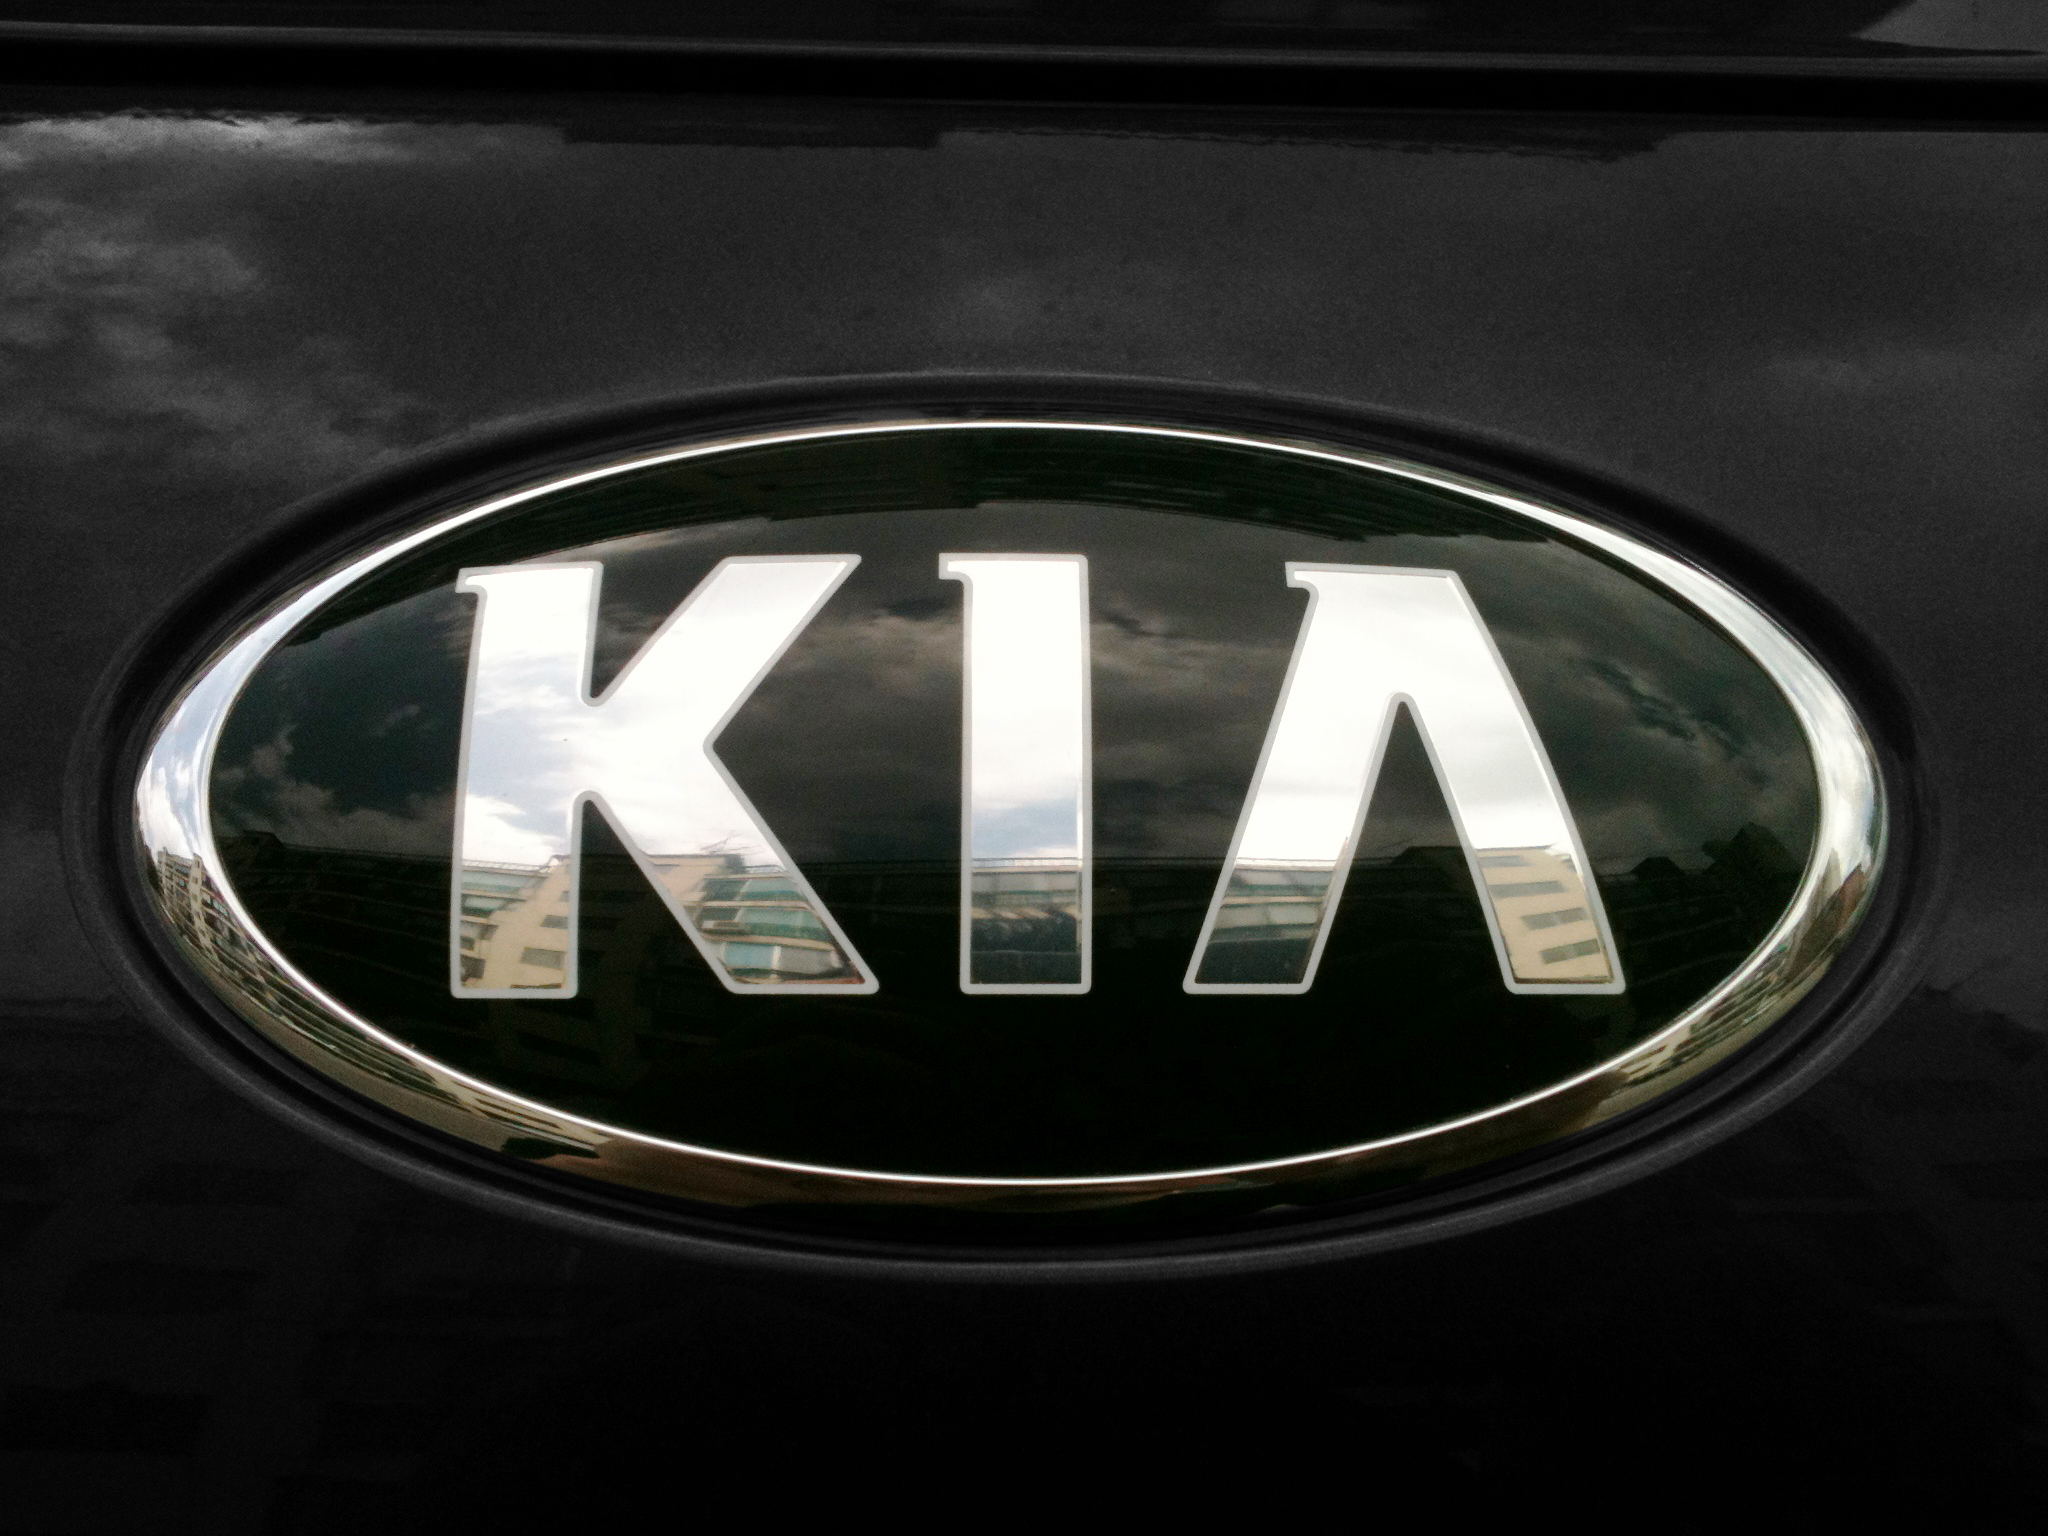 Kia Car Full Hd Images